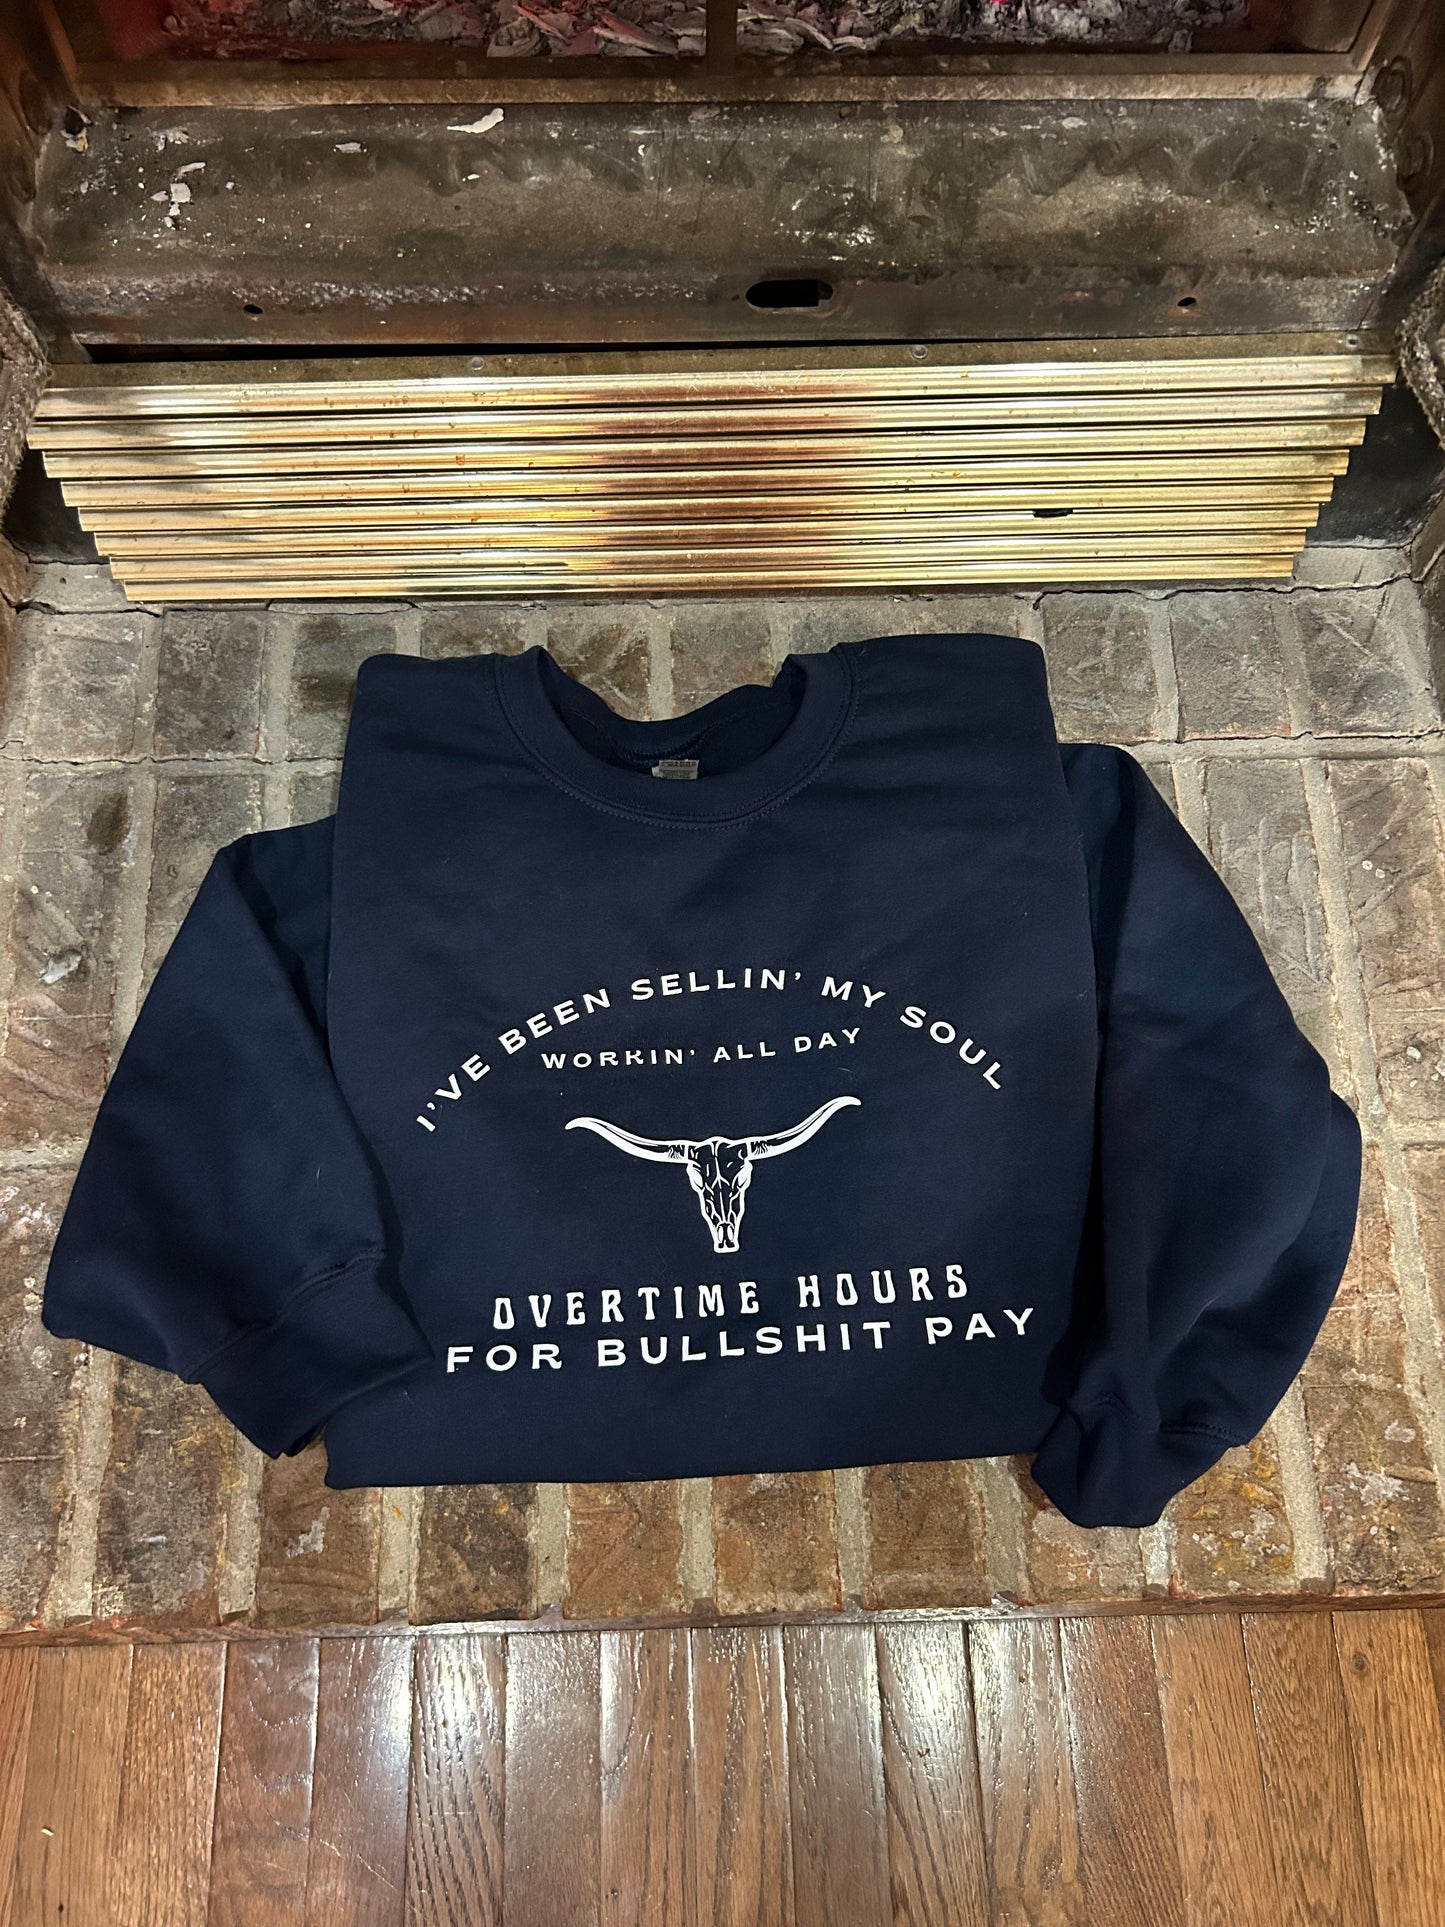 Over time hours for Bullsh*t pay crewneck sweatshirt